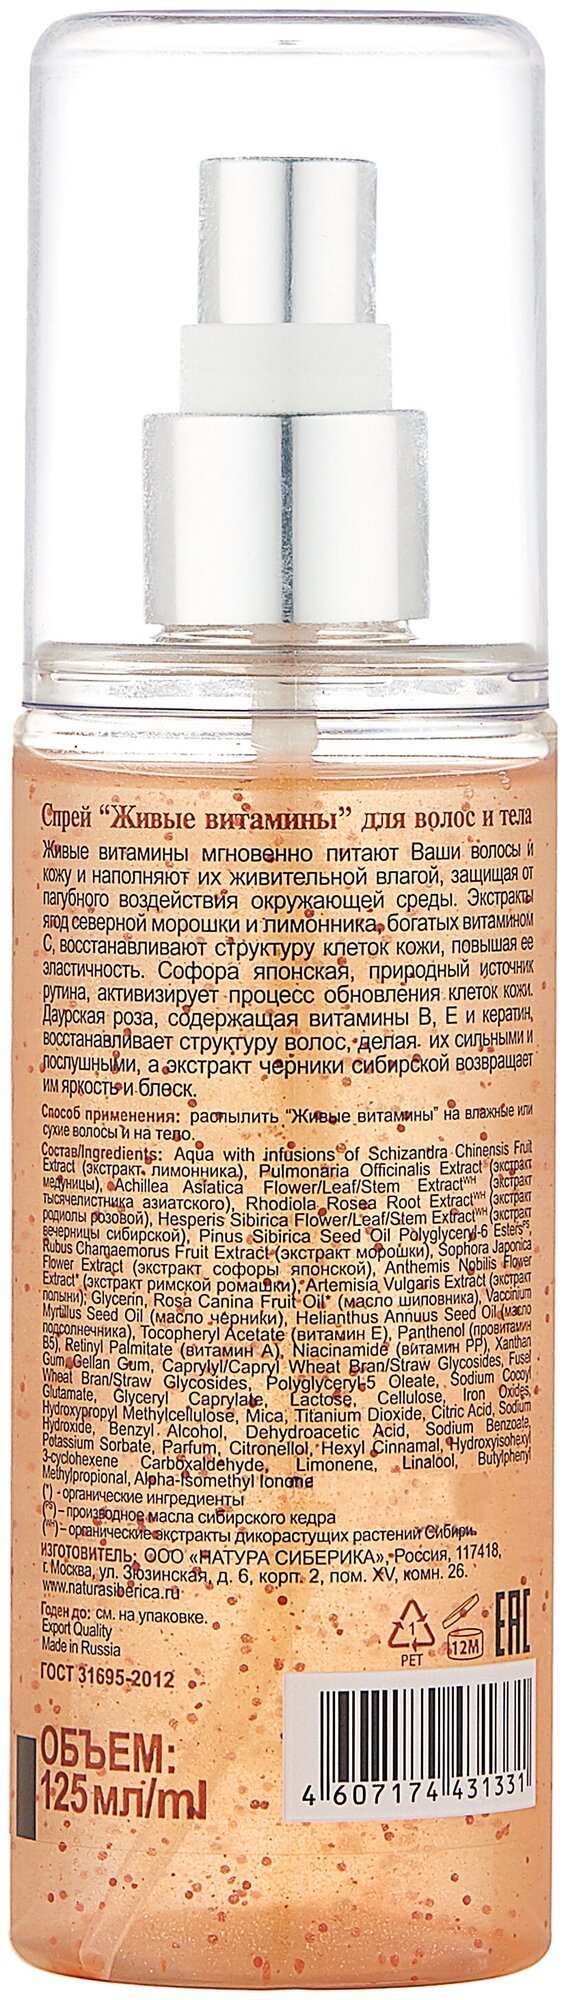 Natura Siberica Спрей для волос и тела "Vivid vitamins", 125мл - фотография № 4